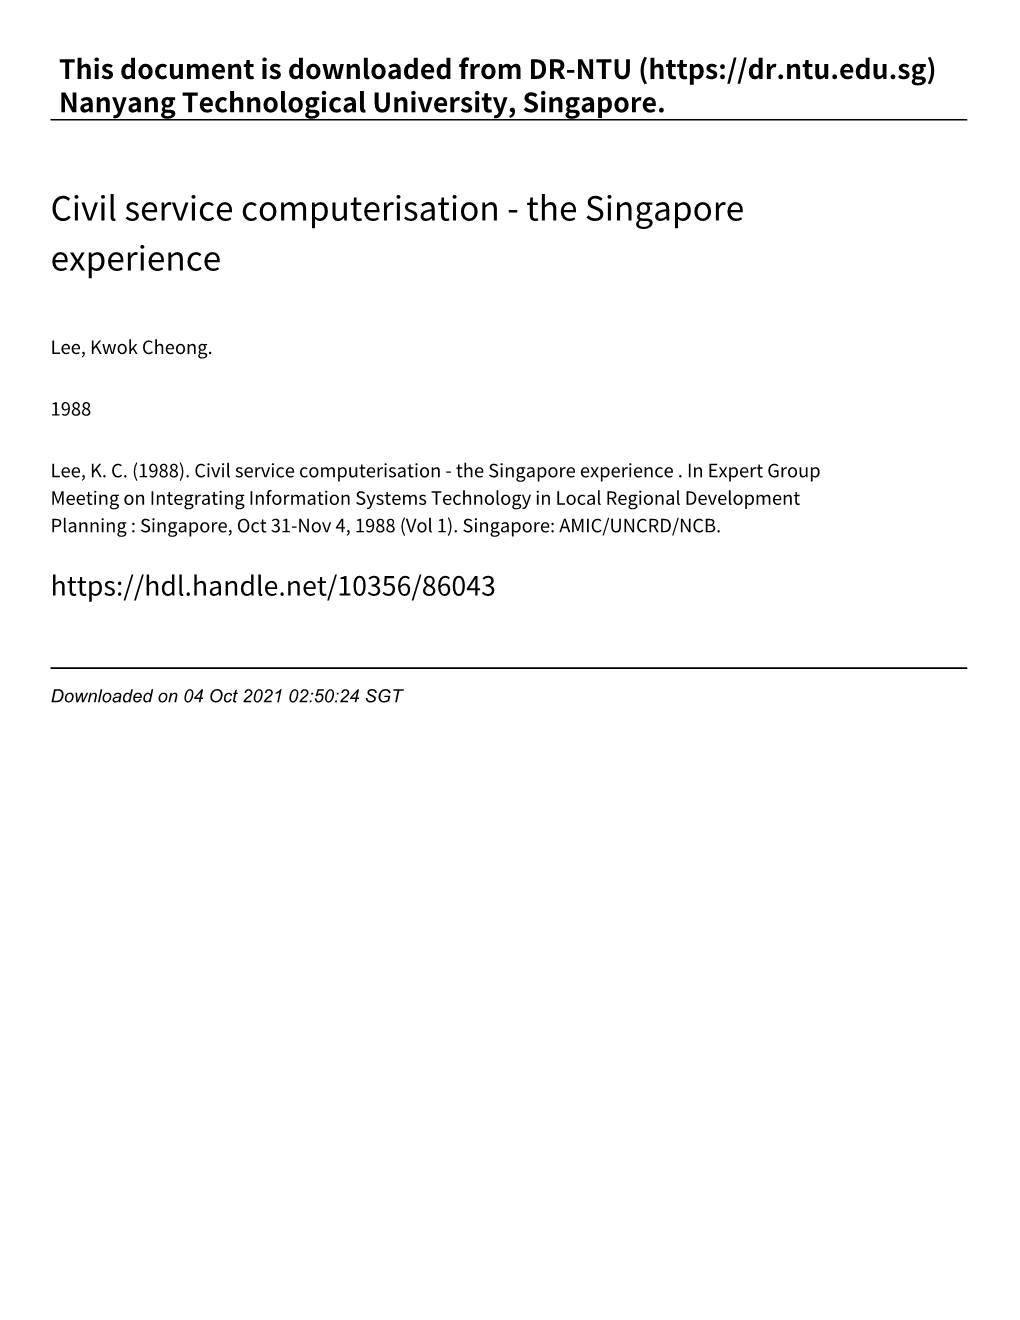 Civil Service Computerisation ‑ the Singapore Experience